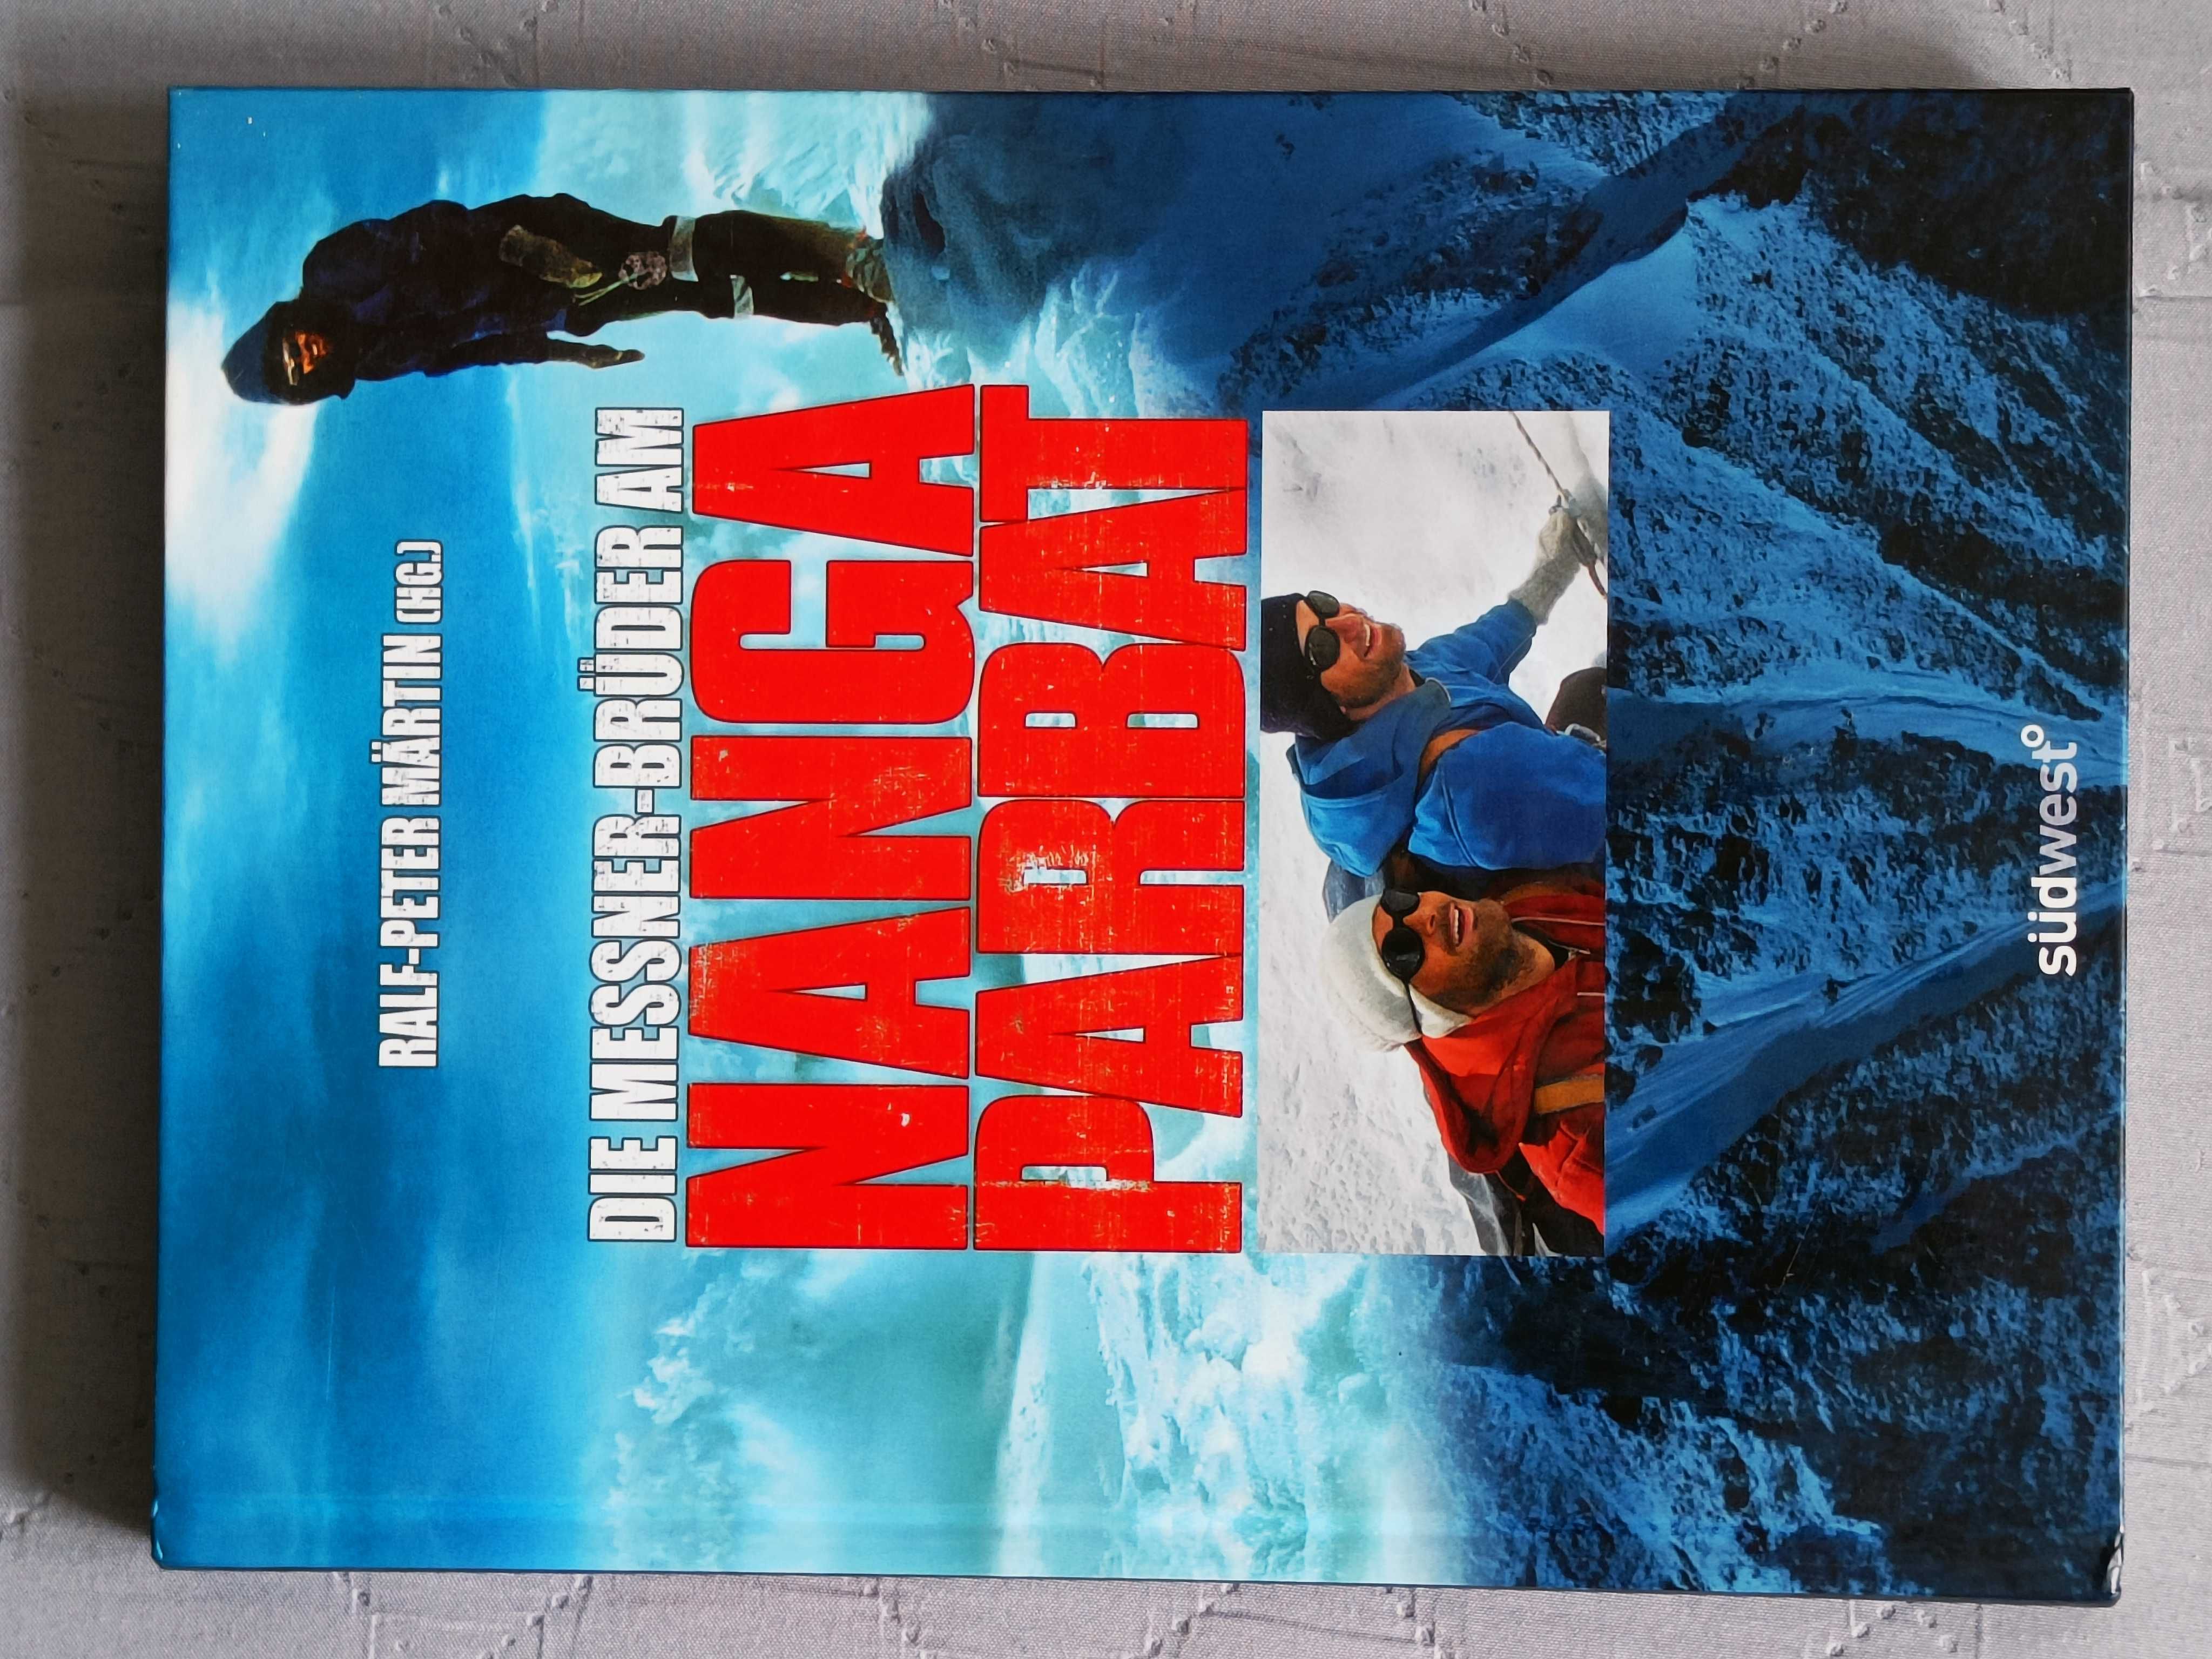 Martin, Die Messner-Bruder am Nanga Parbat - książka po niemiecku